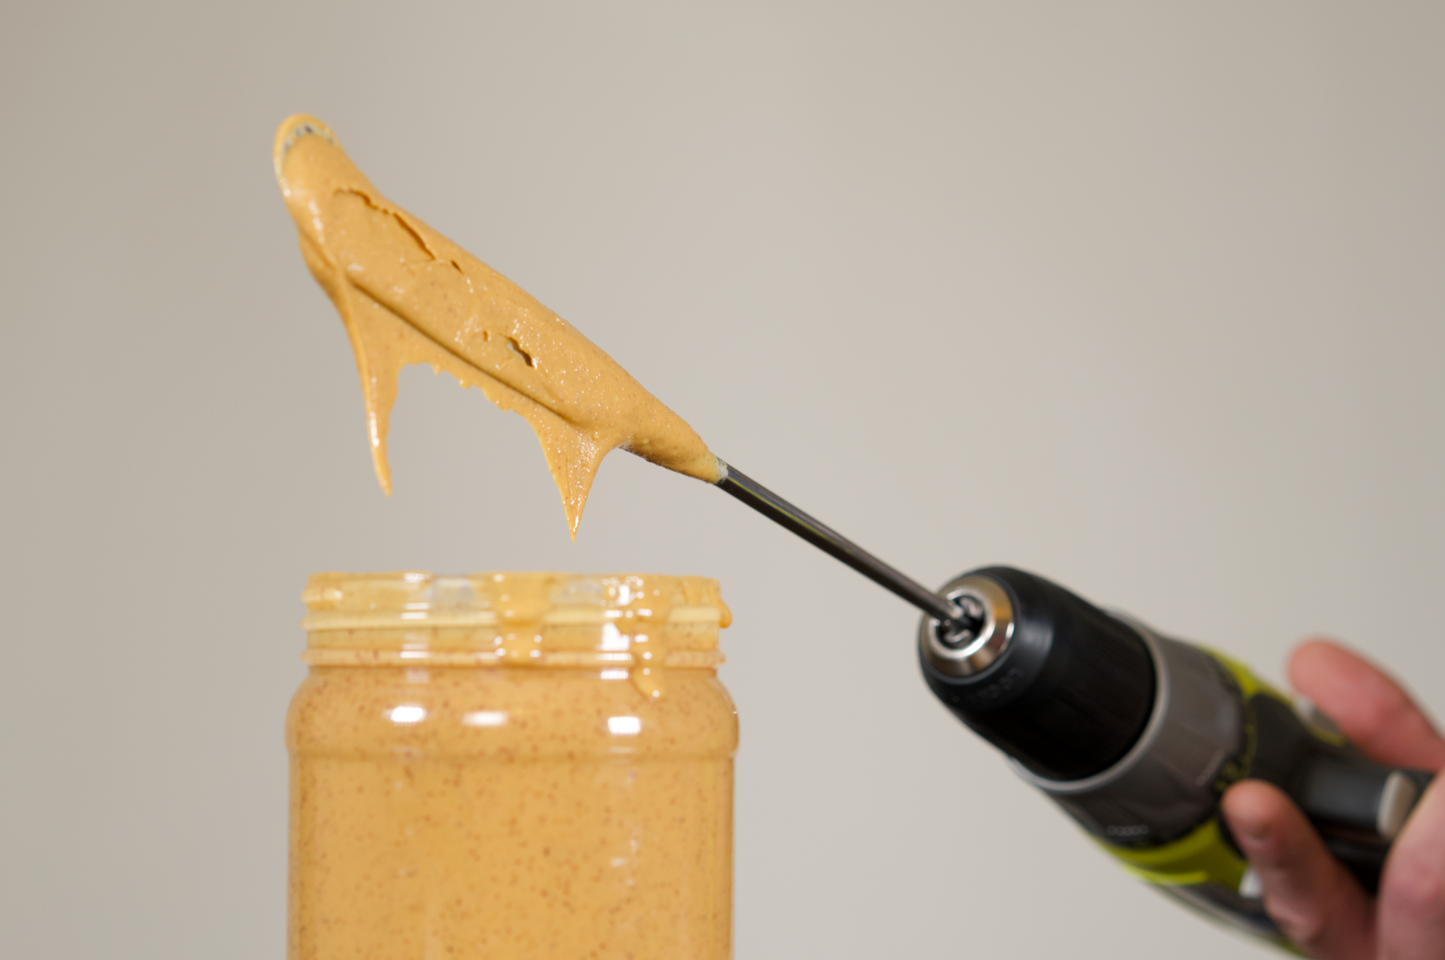 Peanut Butter Stirrer Tool Mixer Gadgets With Scraper Nut Butter Stirrer  Tool Practical Multipurpose Butter & Jam Stirrer Mixing